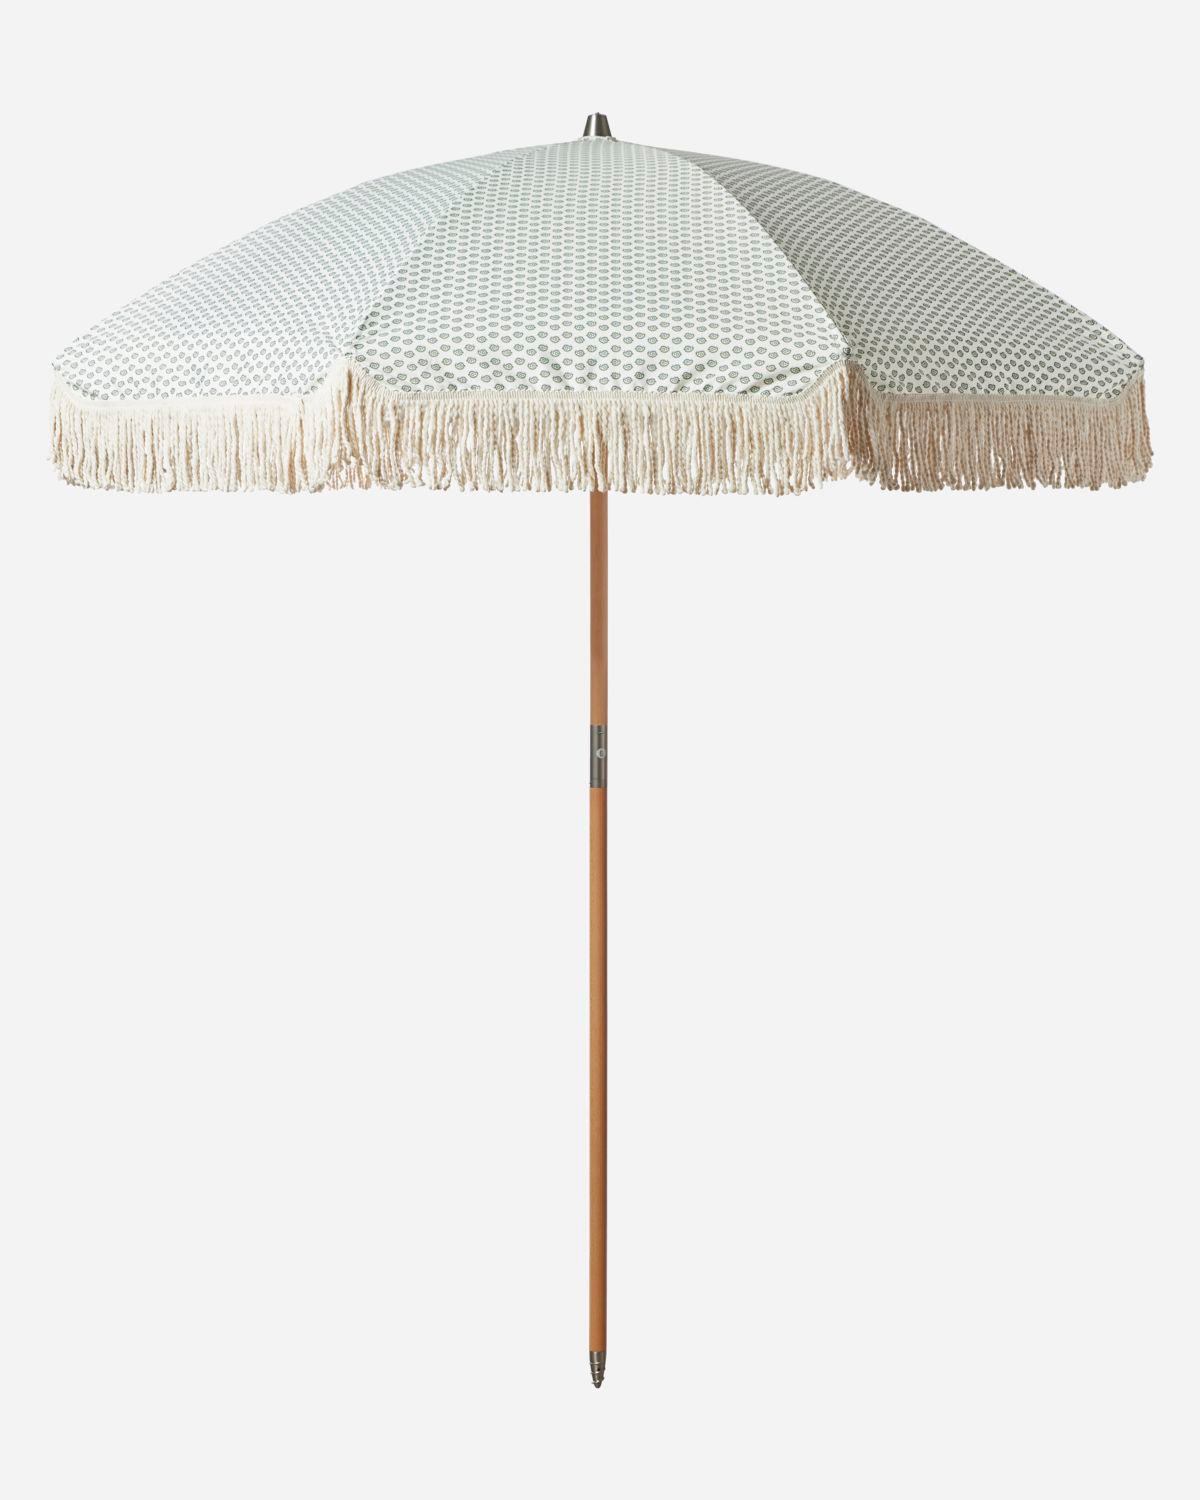 Garden umbrella, Umbra